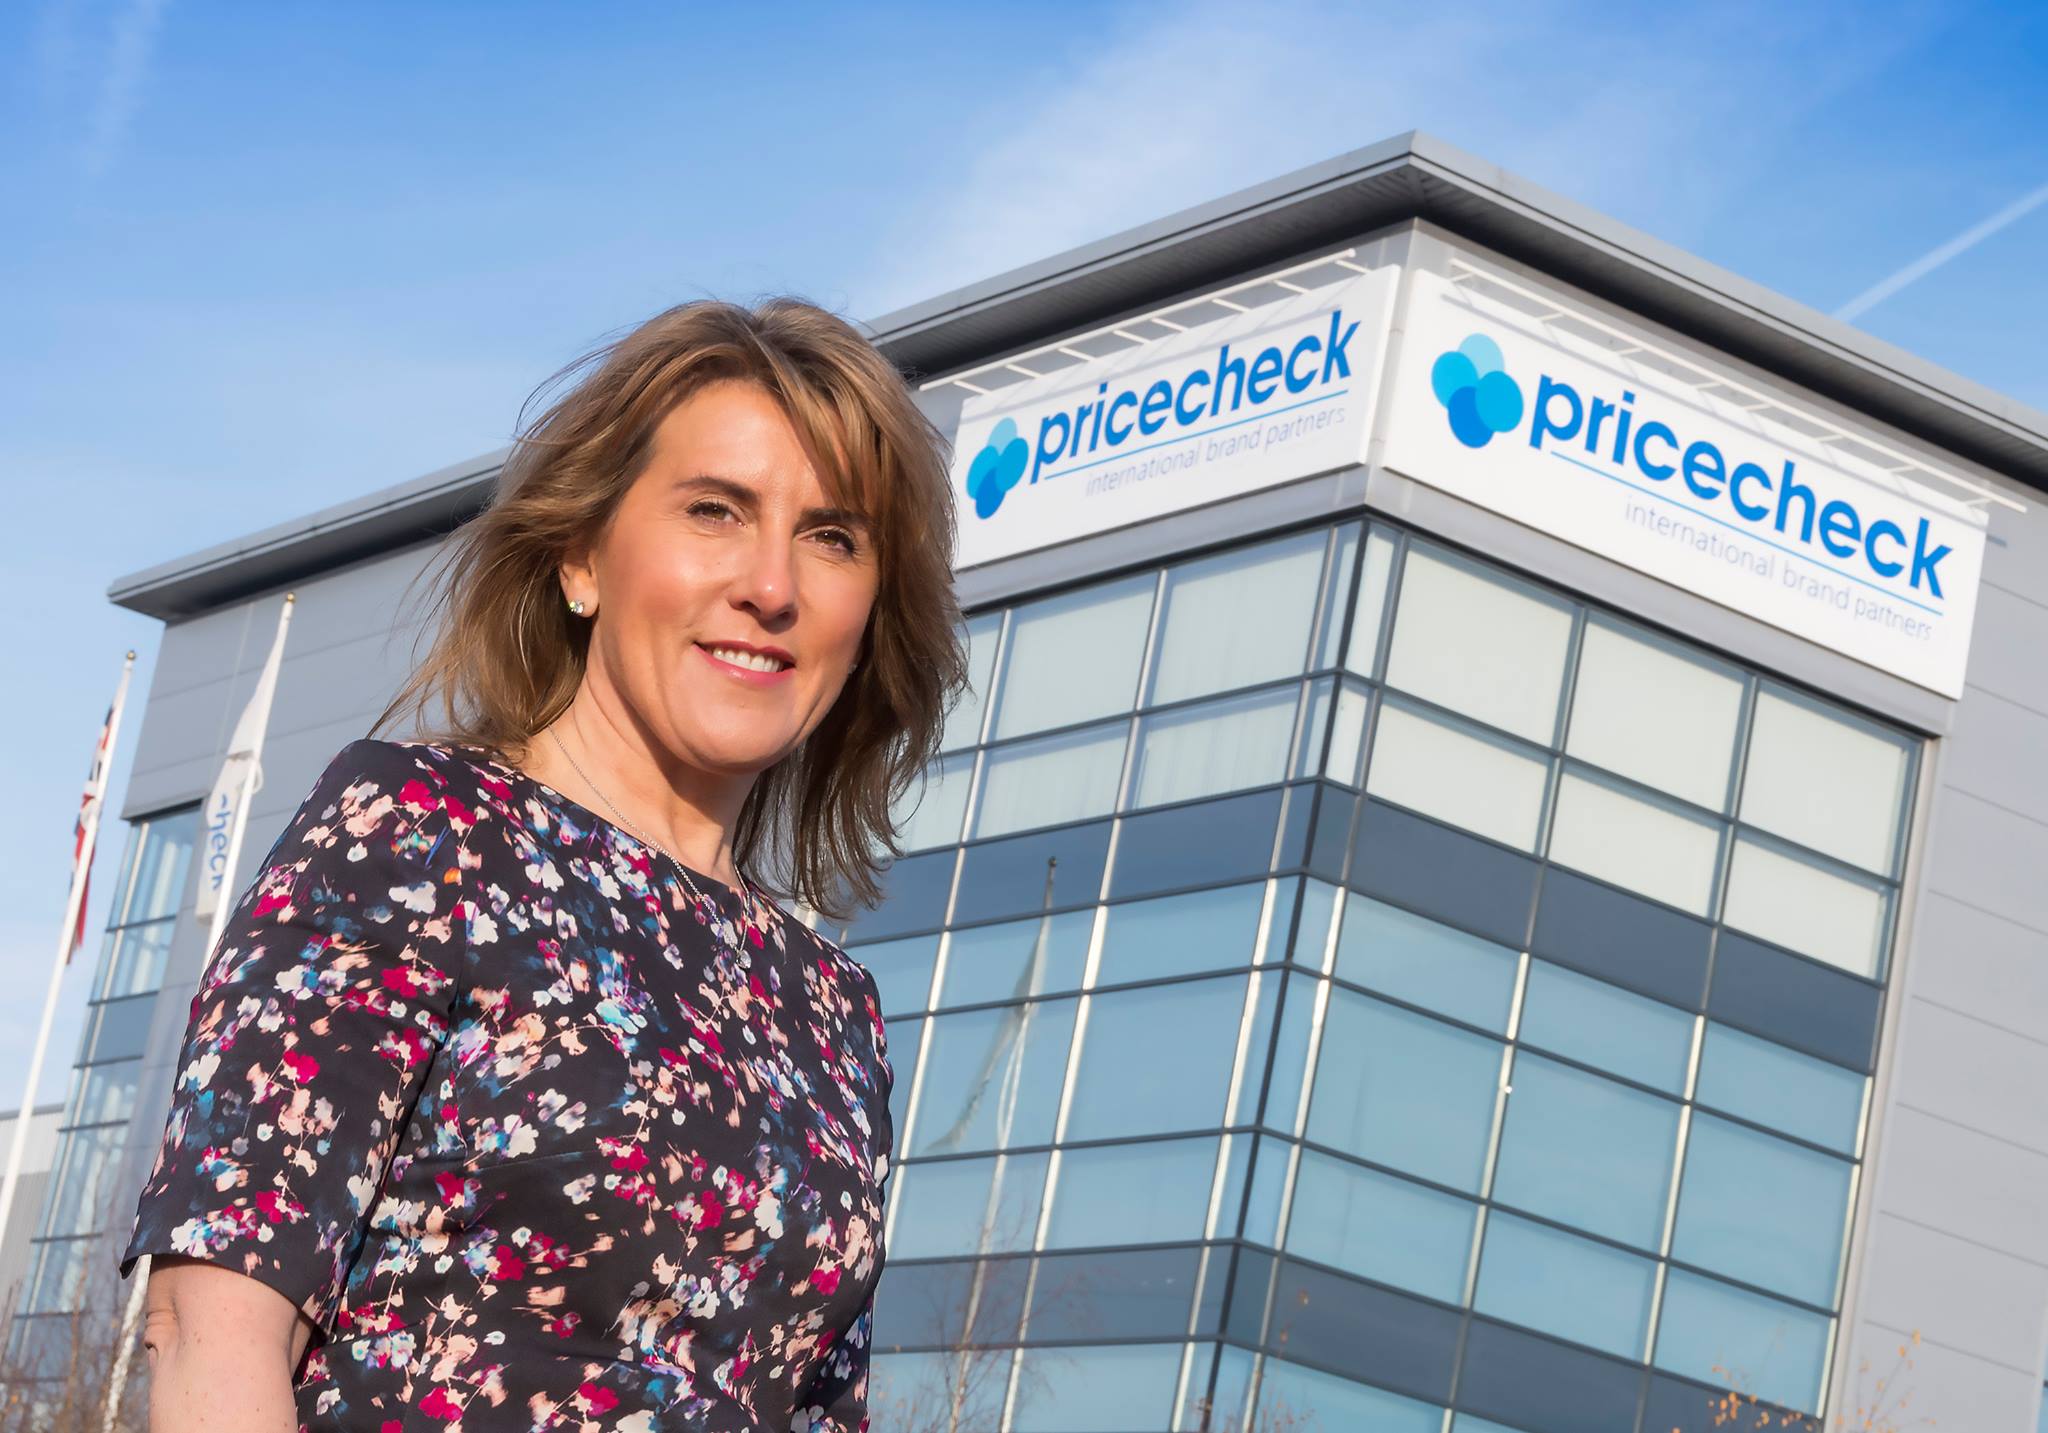 Pricecheck joint MD Debbie Harrison awarded OBE